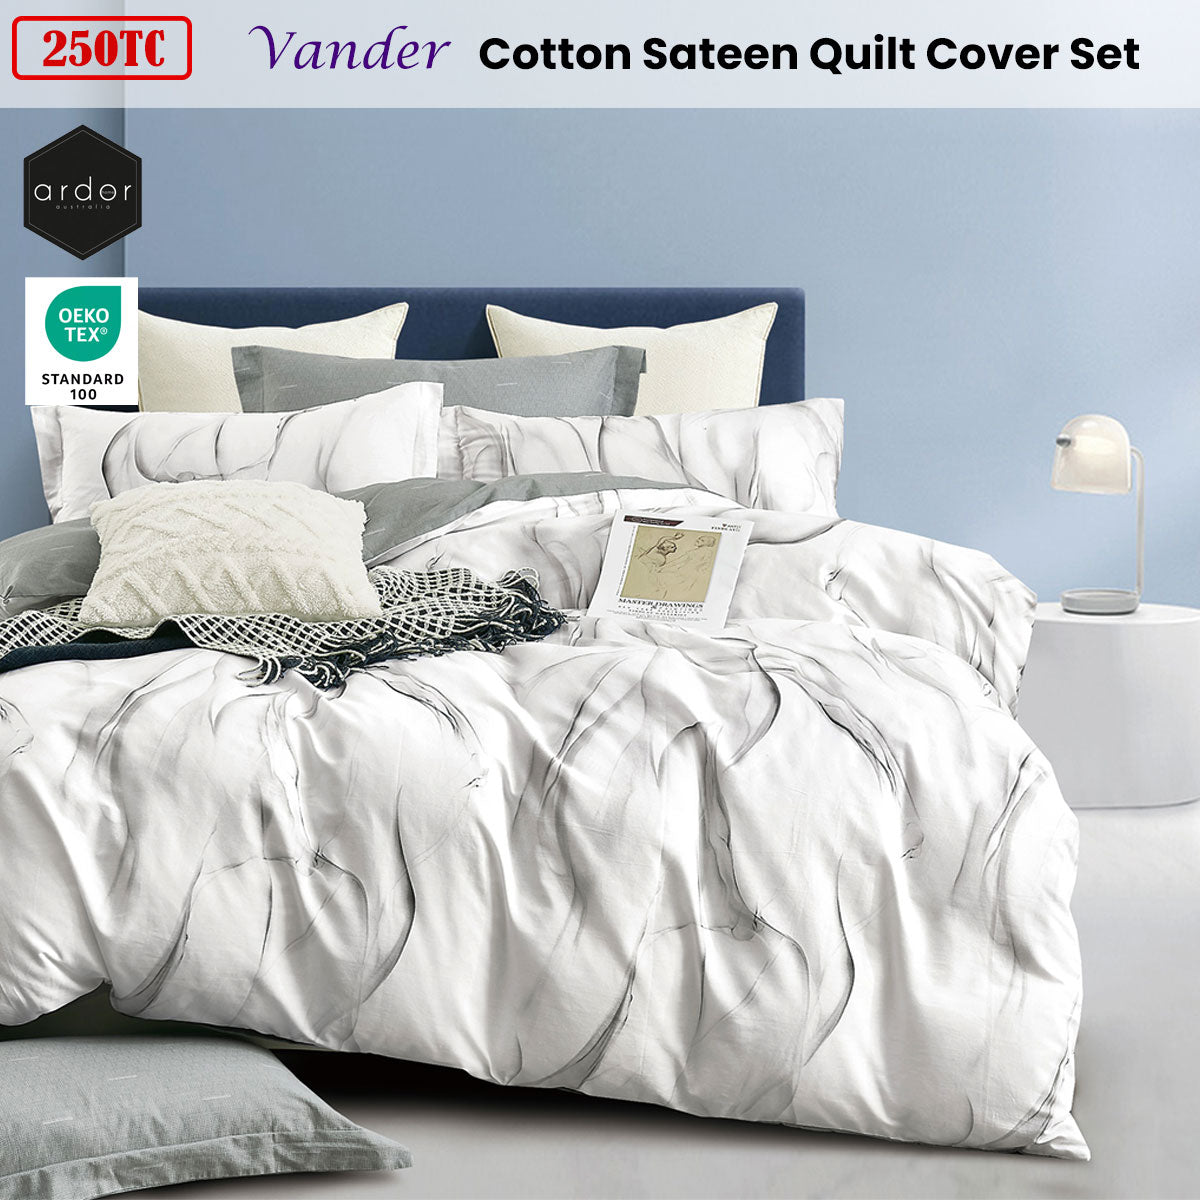 250TC Vander Cotton Sateen Quilt Cover Set King